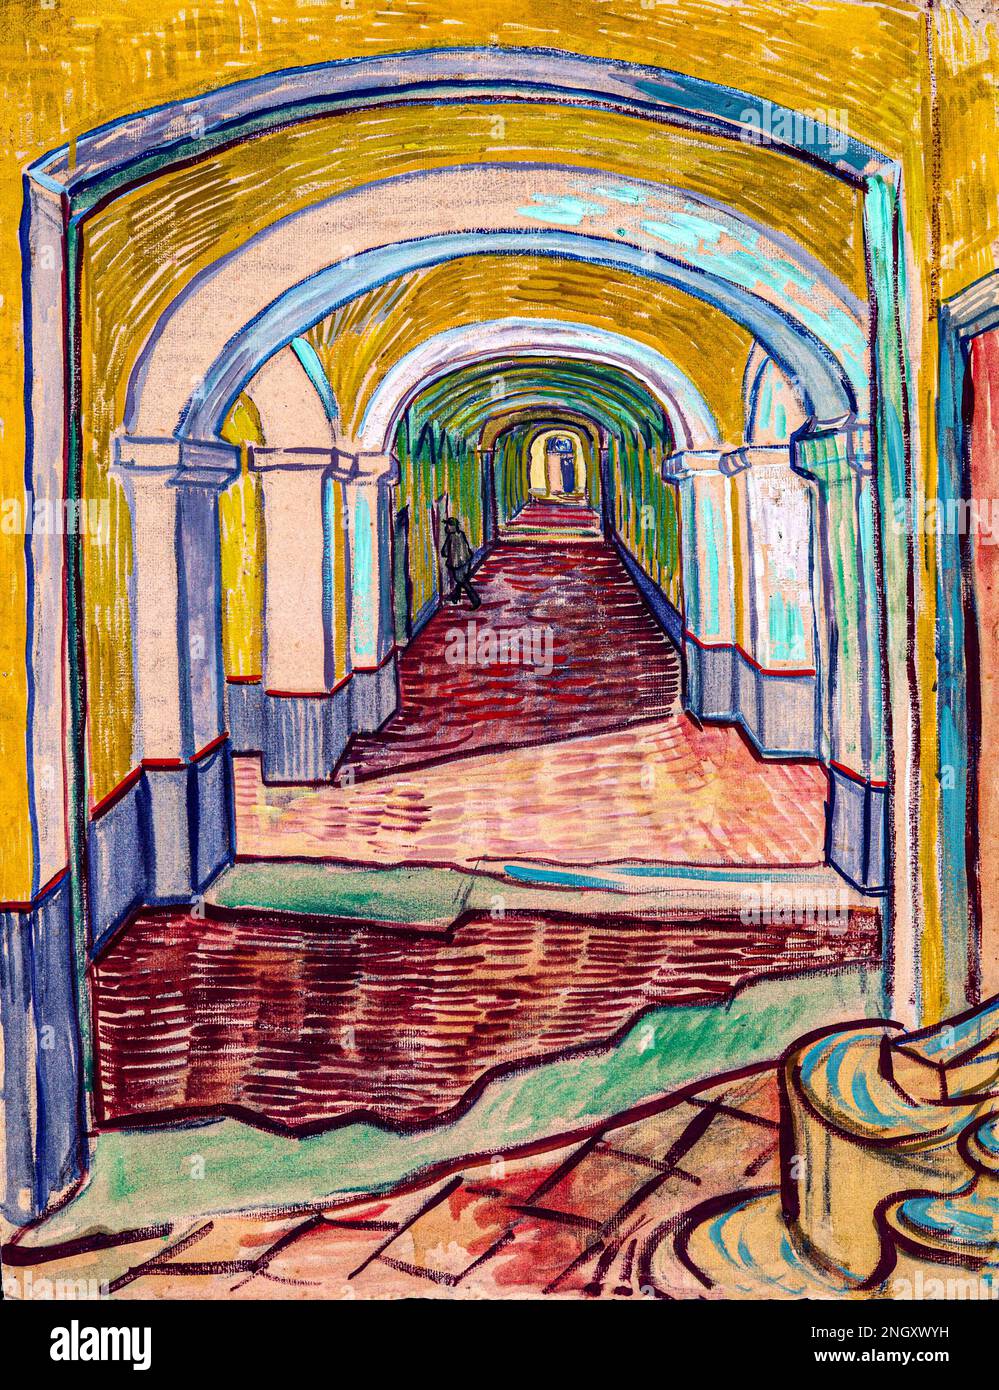 Corridor in the Asylum von Vincent van Gogh More: Original gemeinfreies Bild aus DEM MET Stockfoto